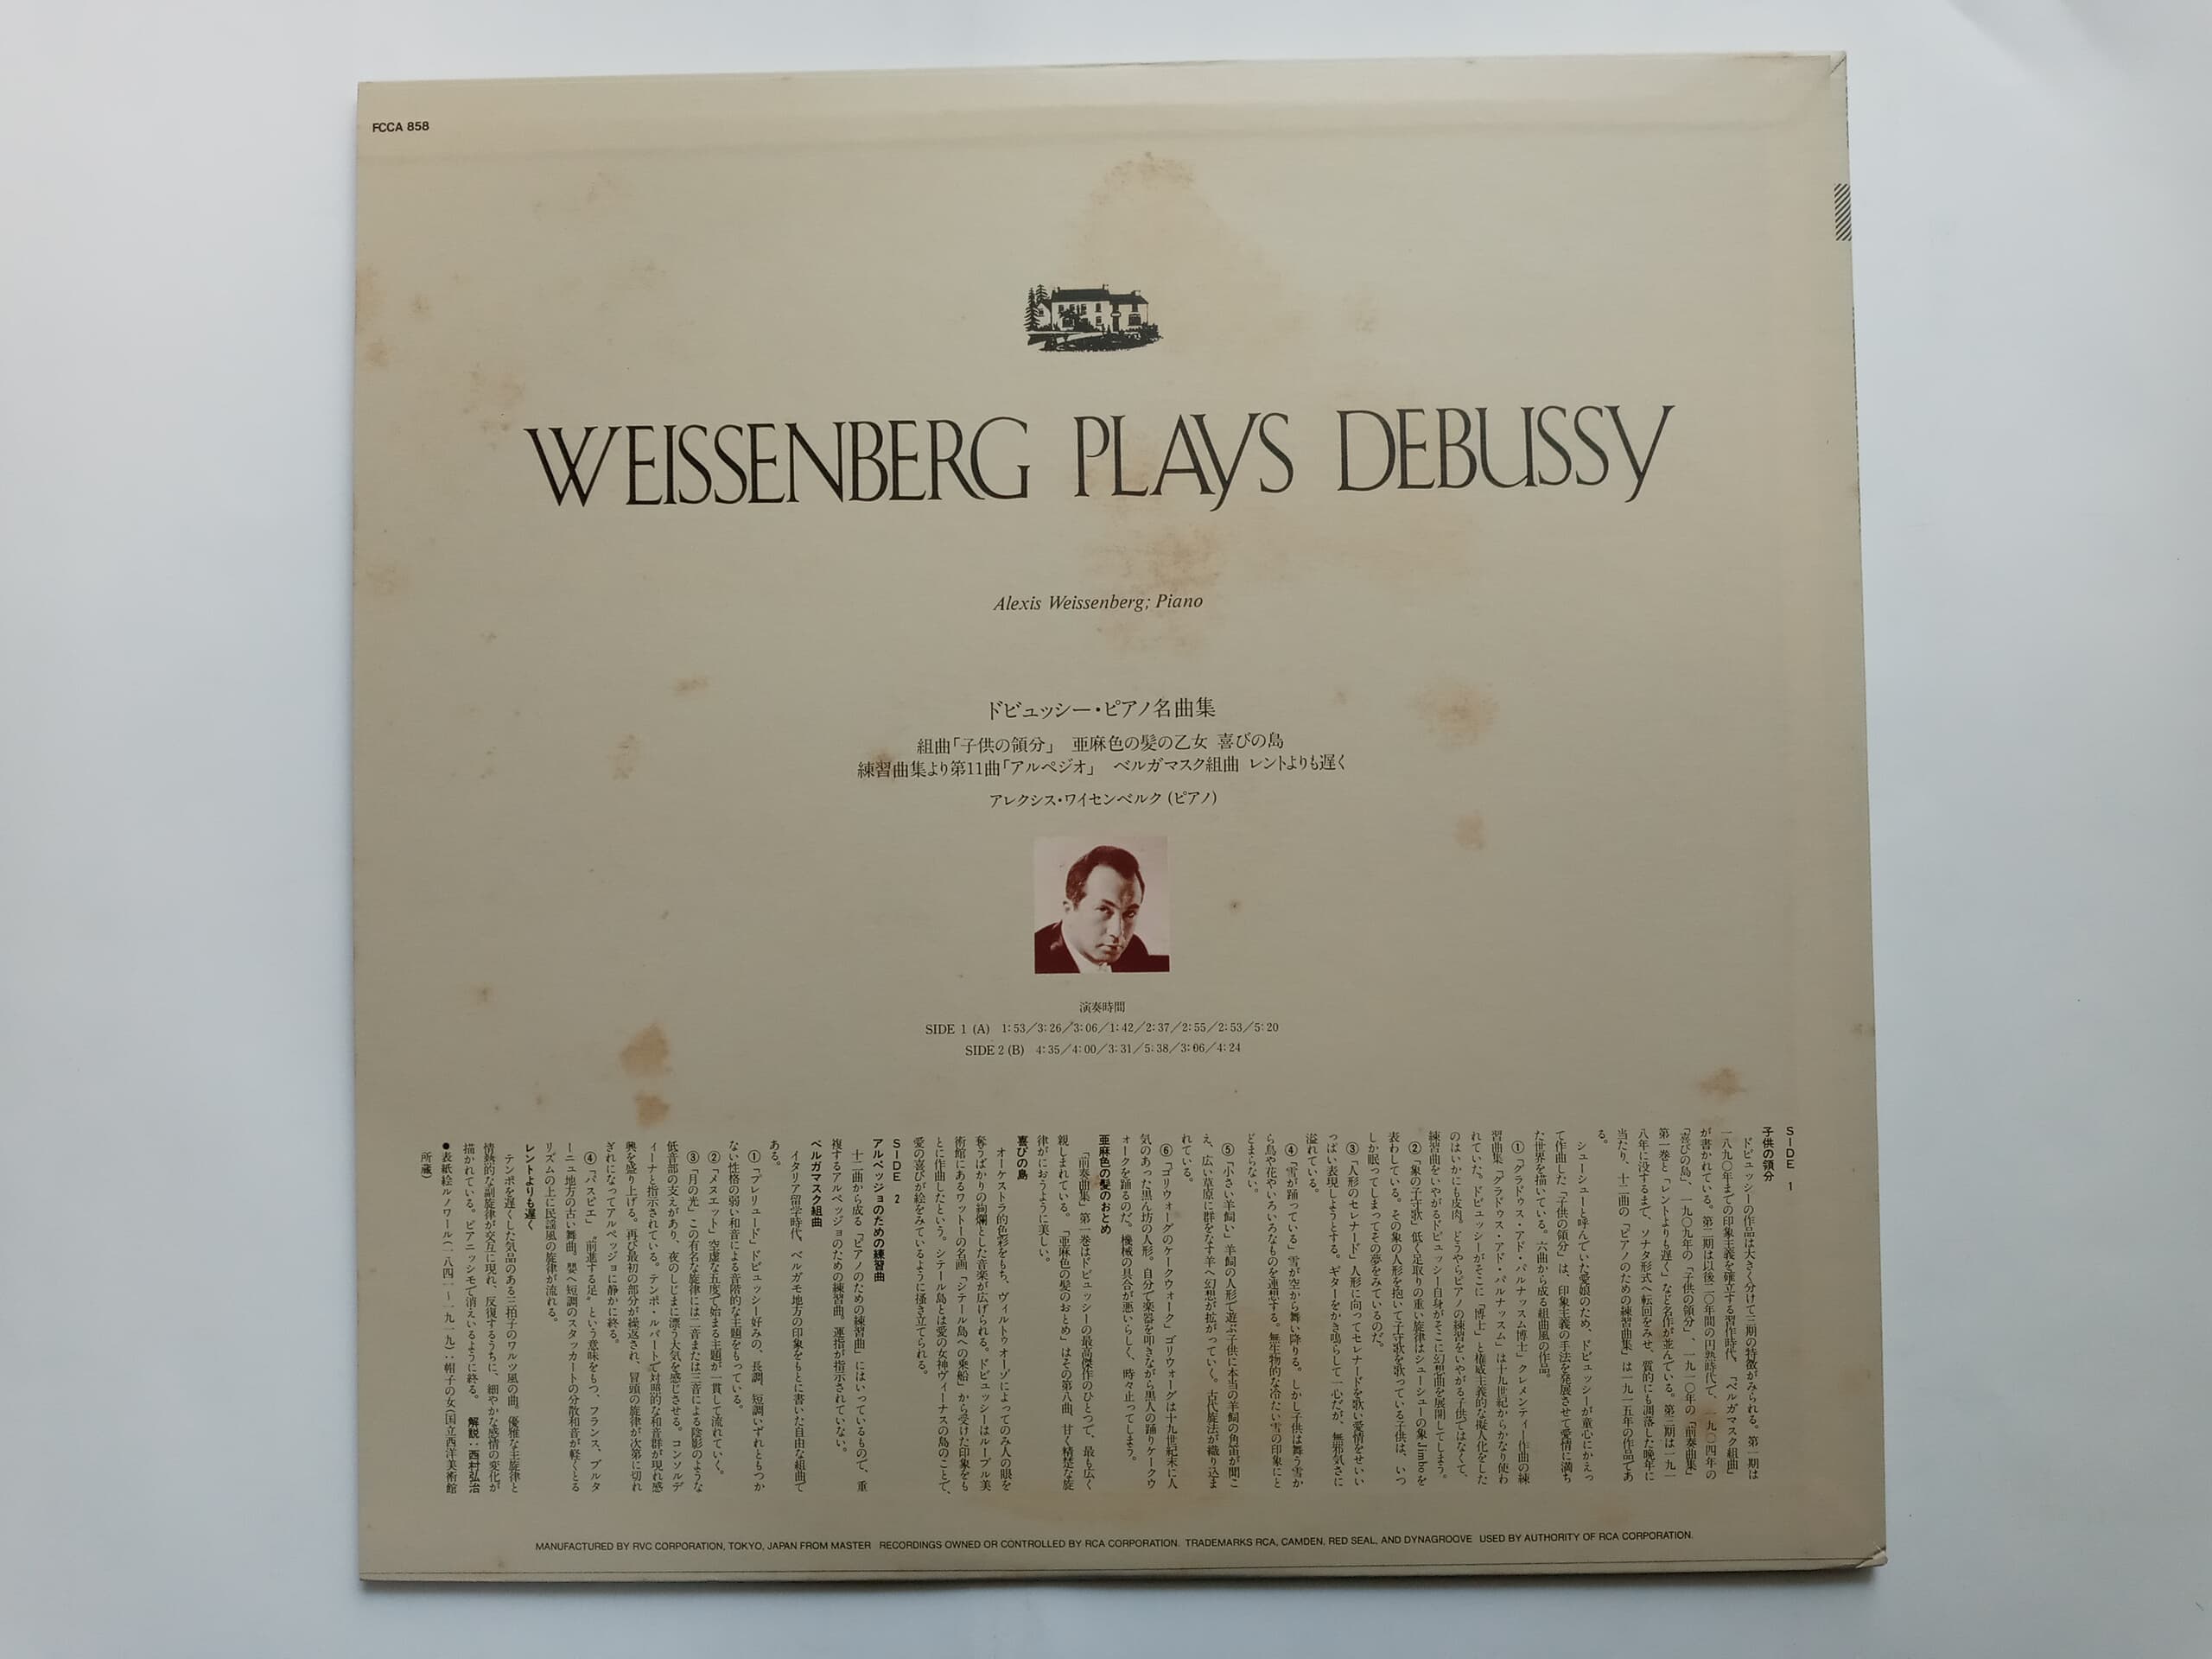 LP(수입) 드뷔시: Weissenberg Plays Debussy - 알렉시스 바이젠베르크 